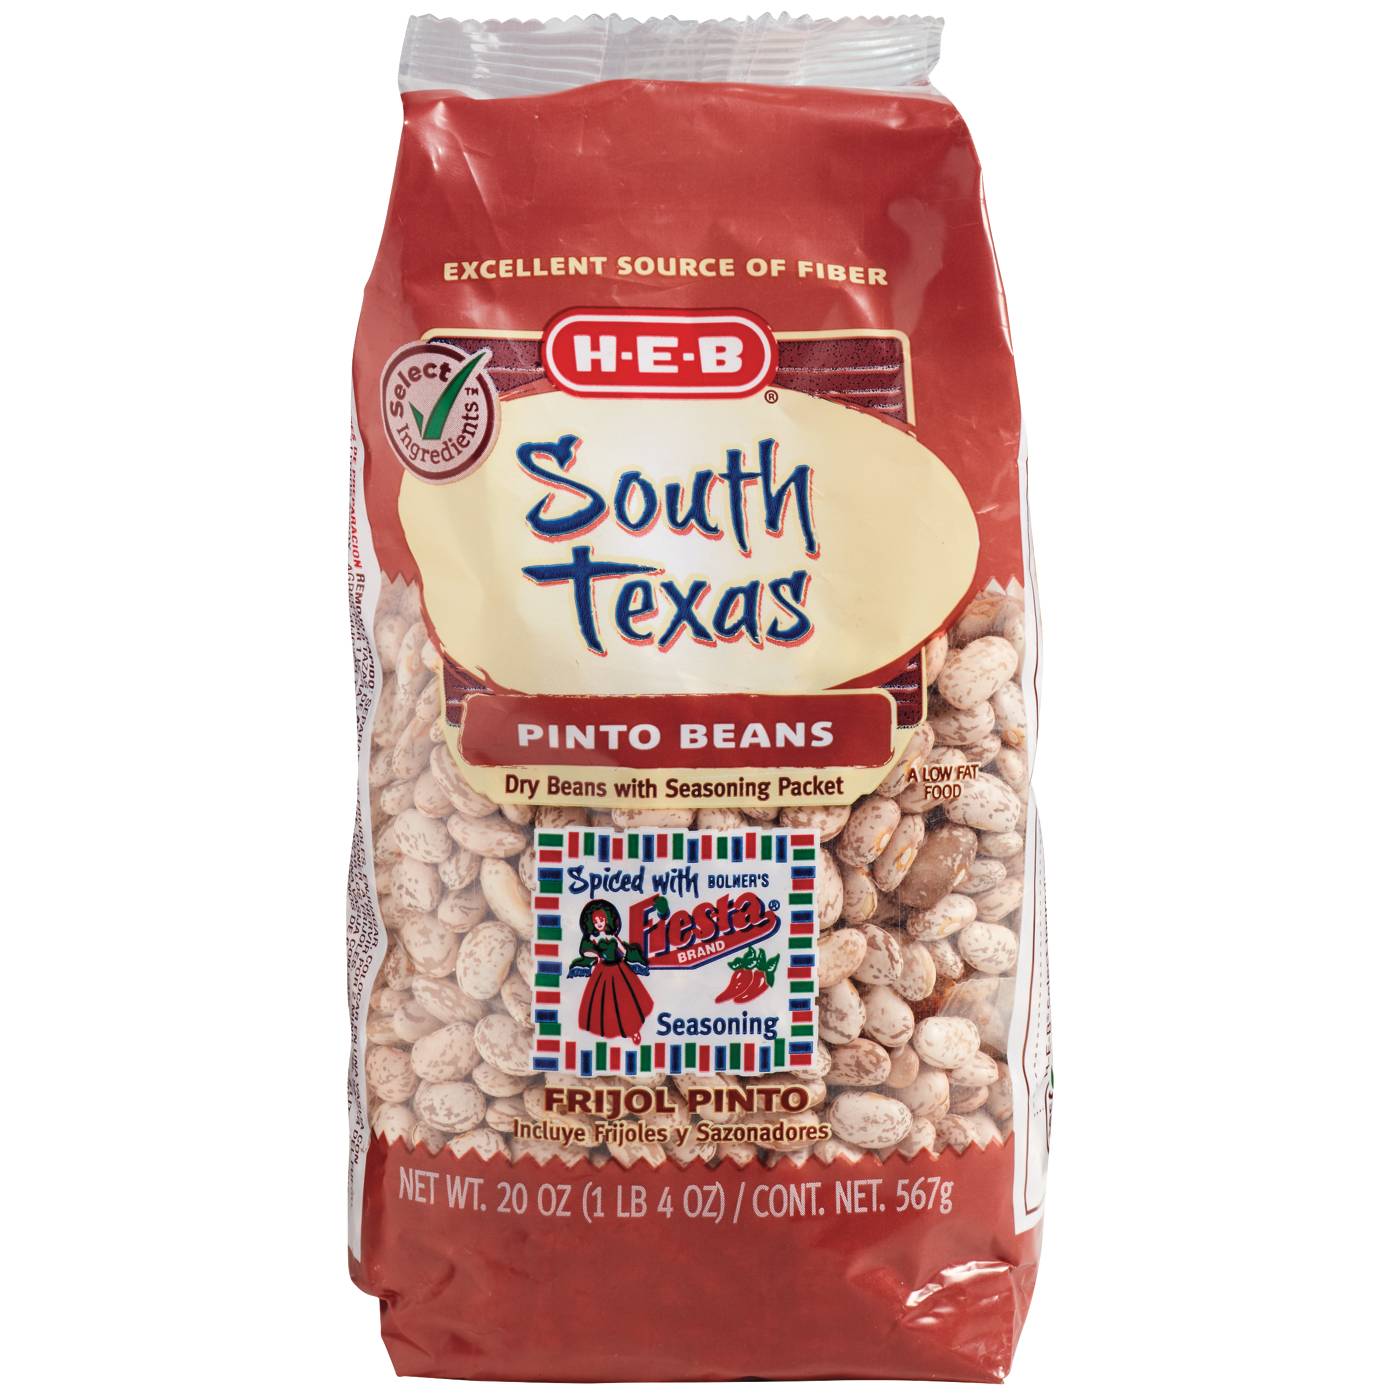 H-E-B South Texas Pinto Beans; image 1 of 2